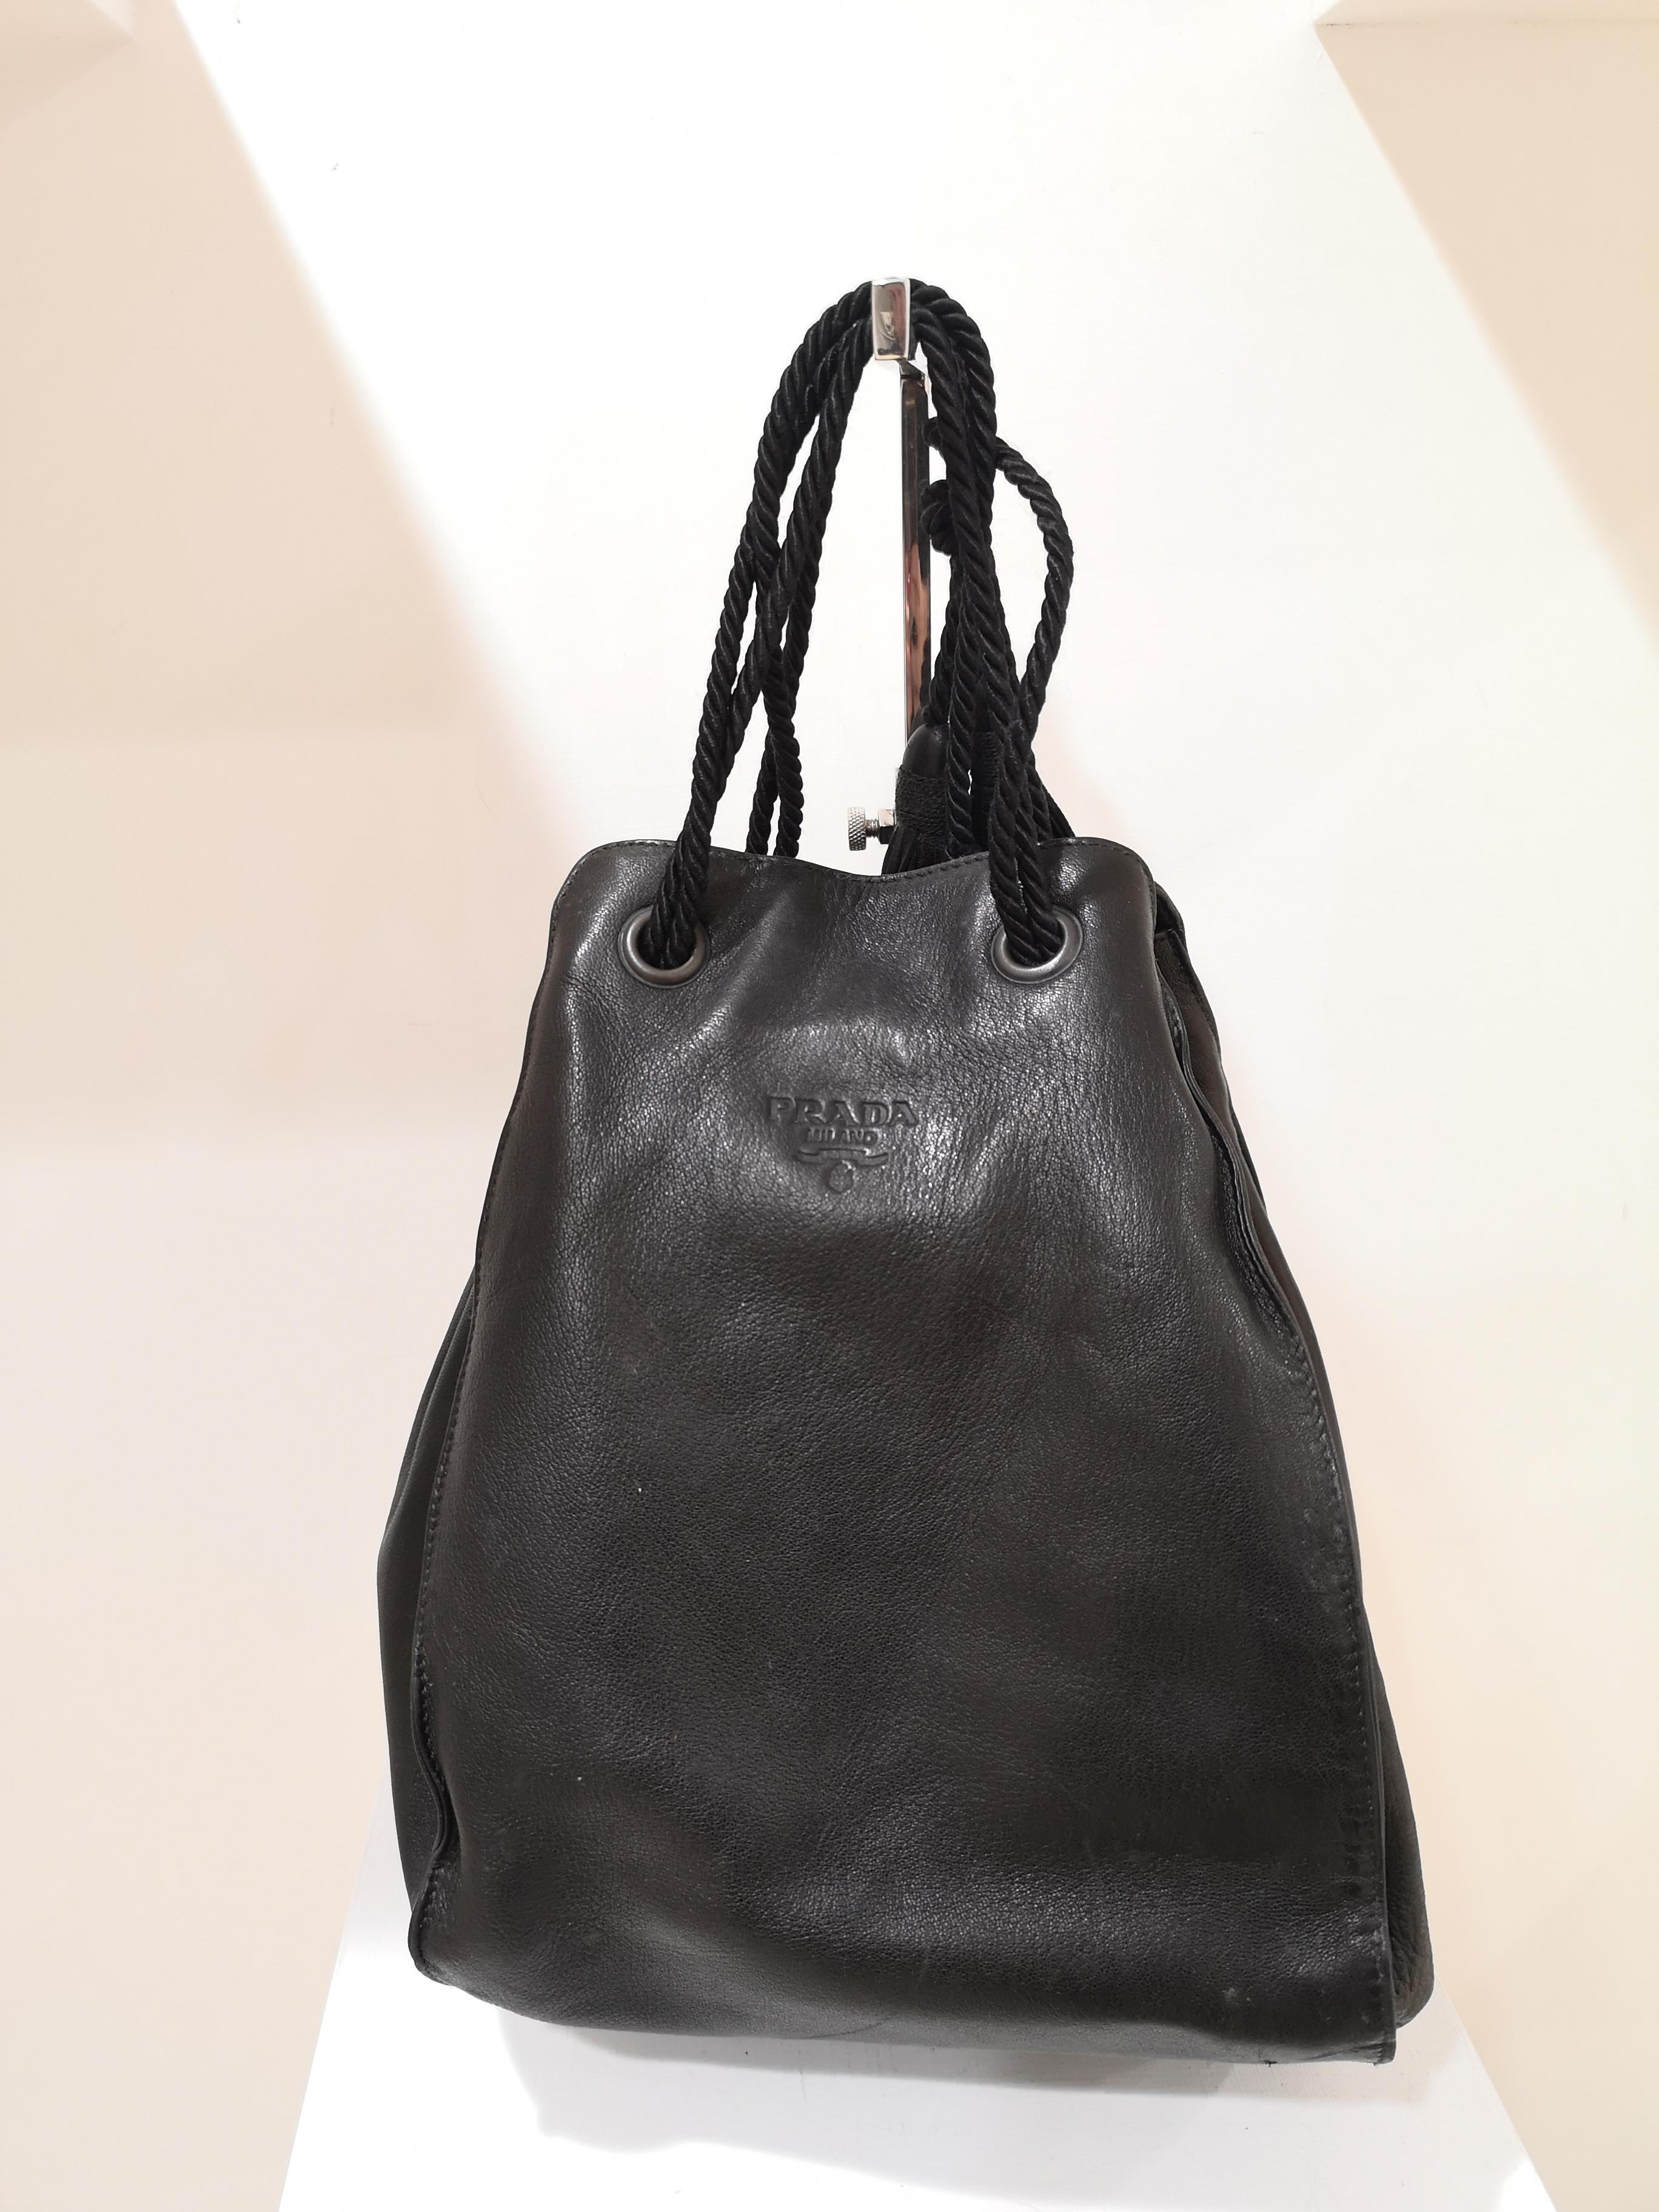 Prada black leather satchel 1